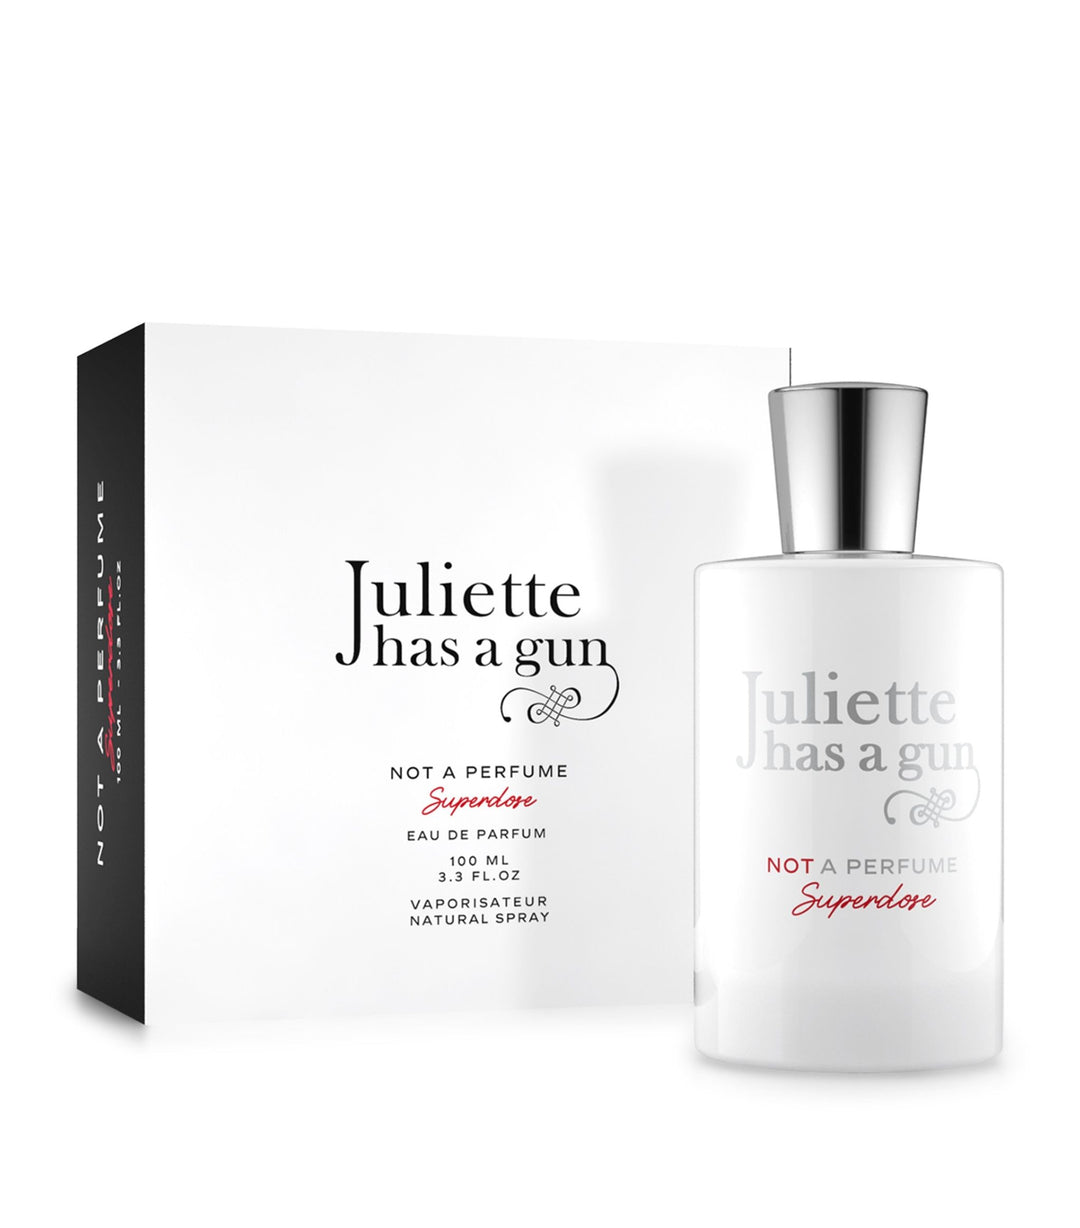 Juliette Has A Gun Not A Perfume Superdose Eau De Parfum Spray